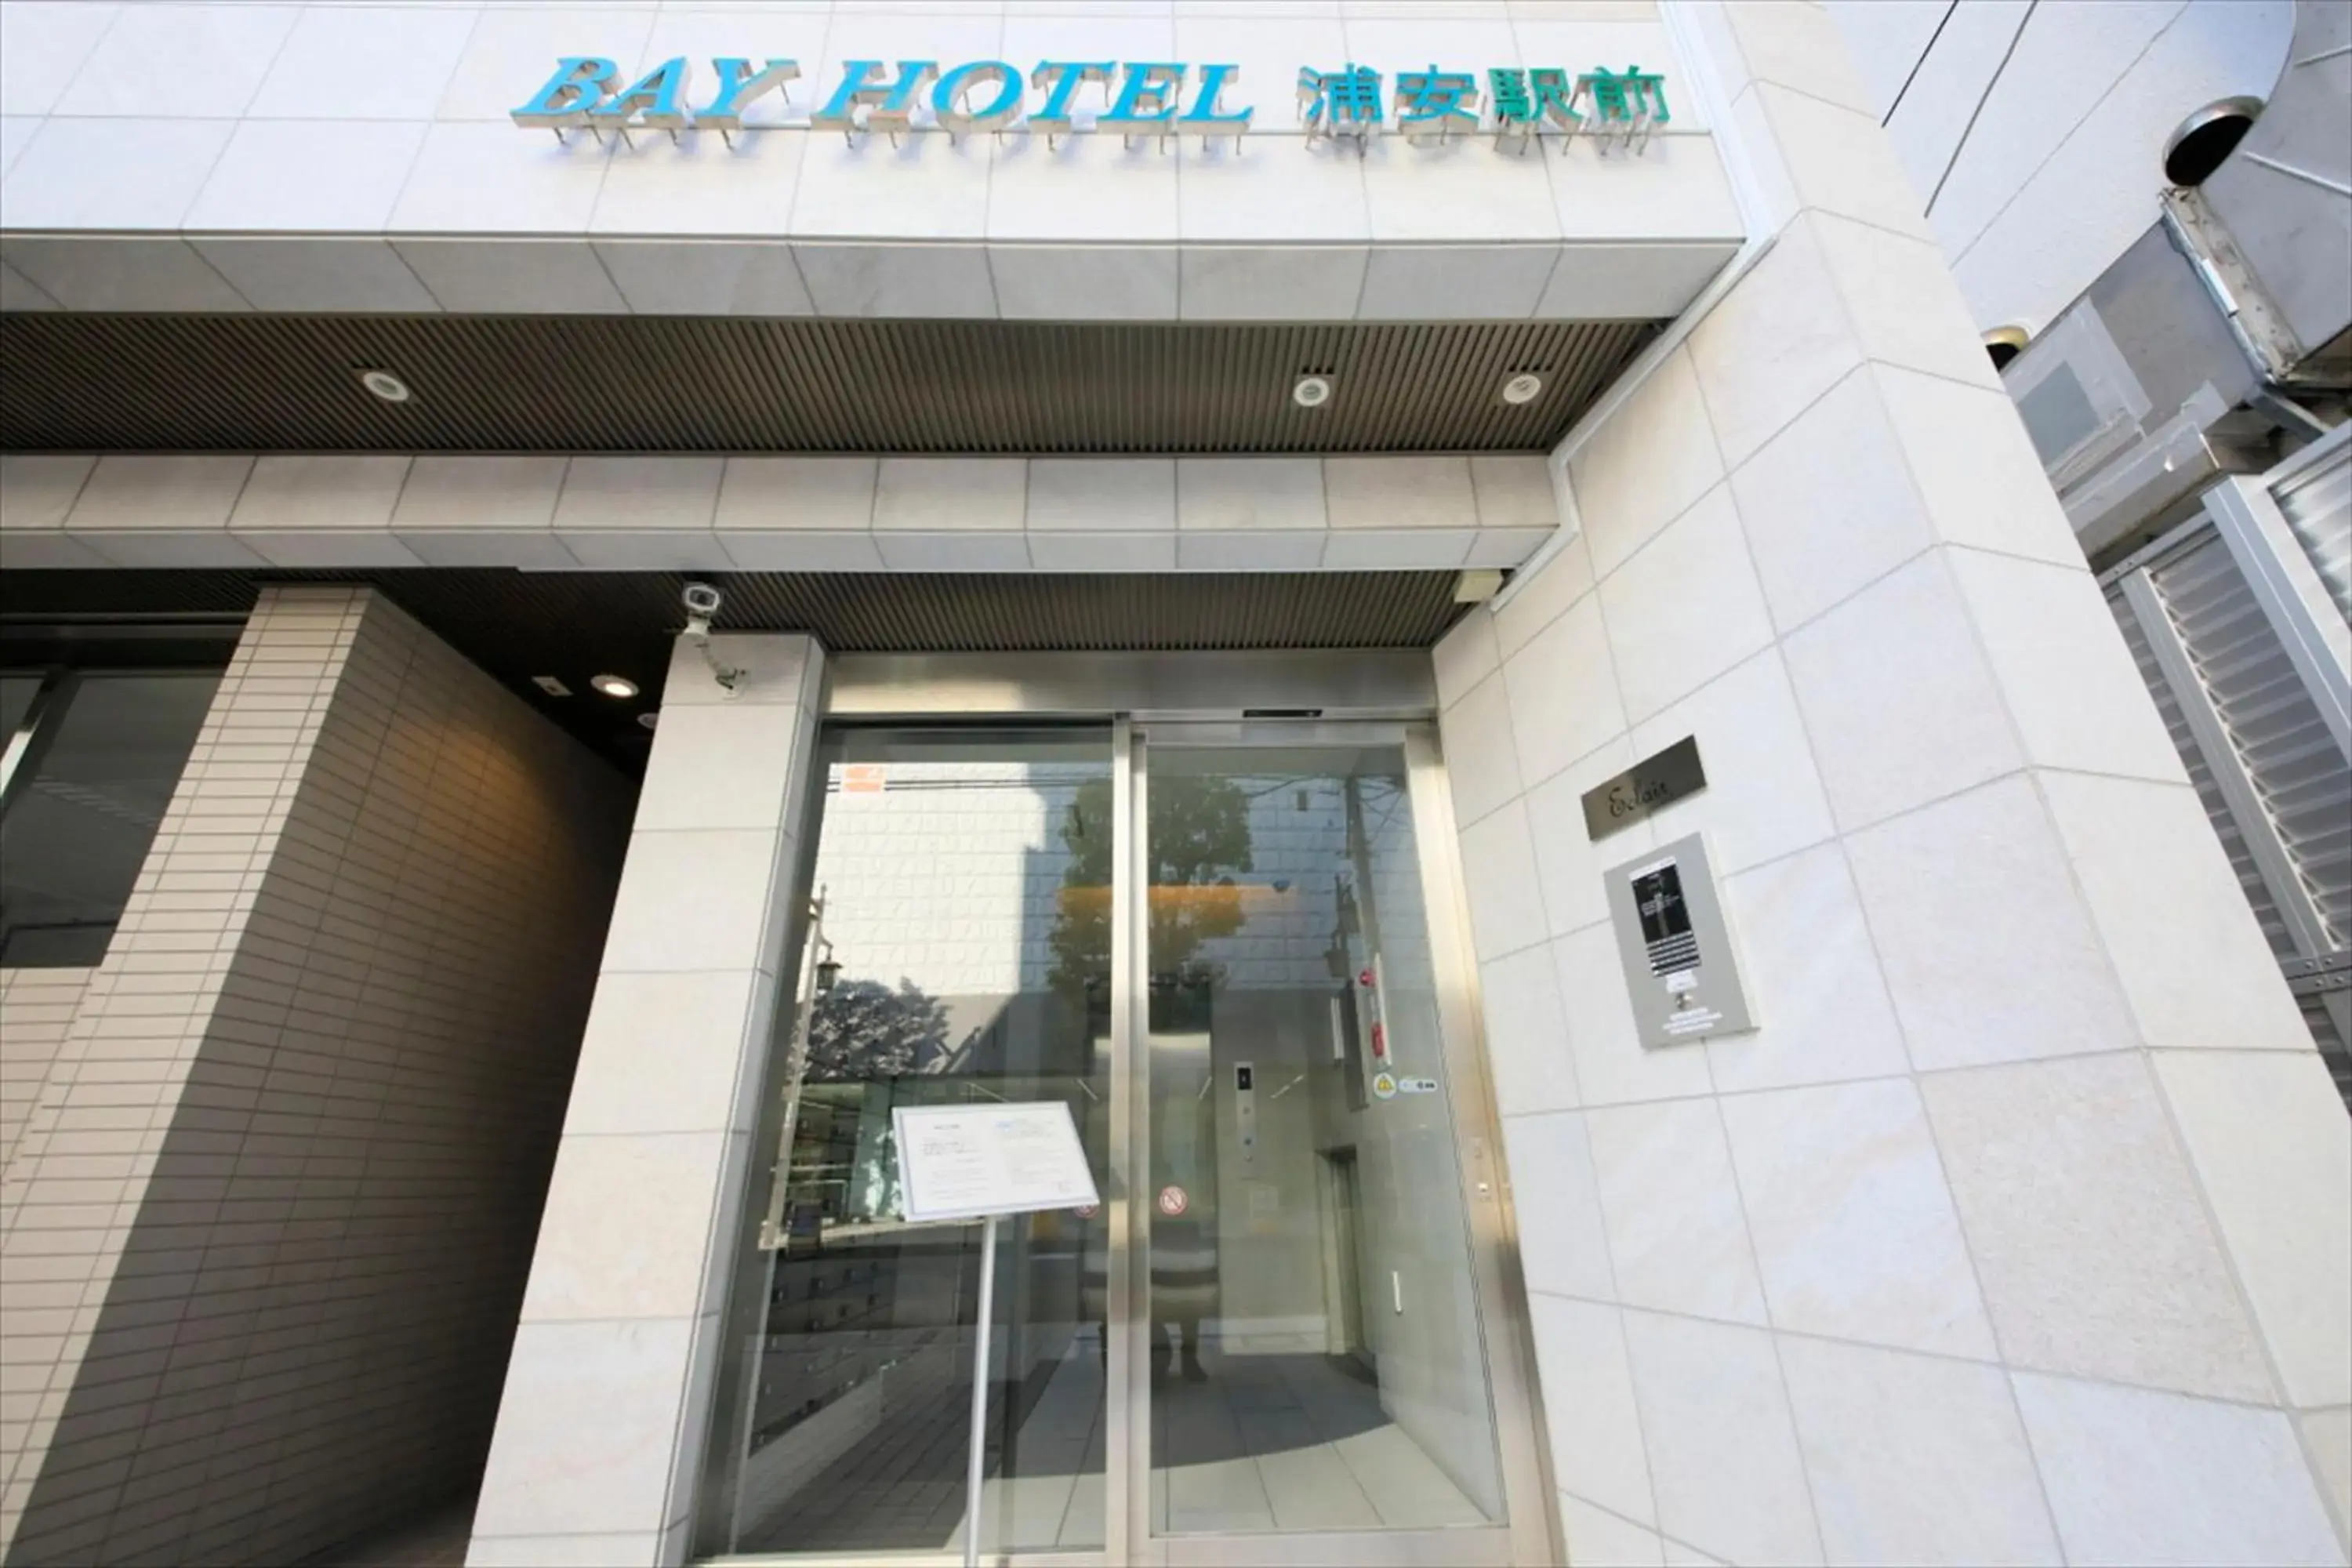 Facade/entrance in Bay Hotel Urayasu-ekimae